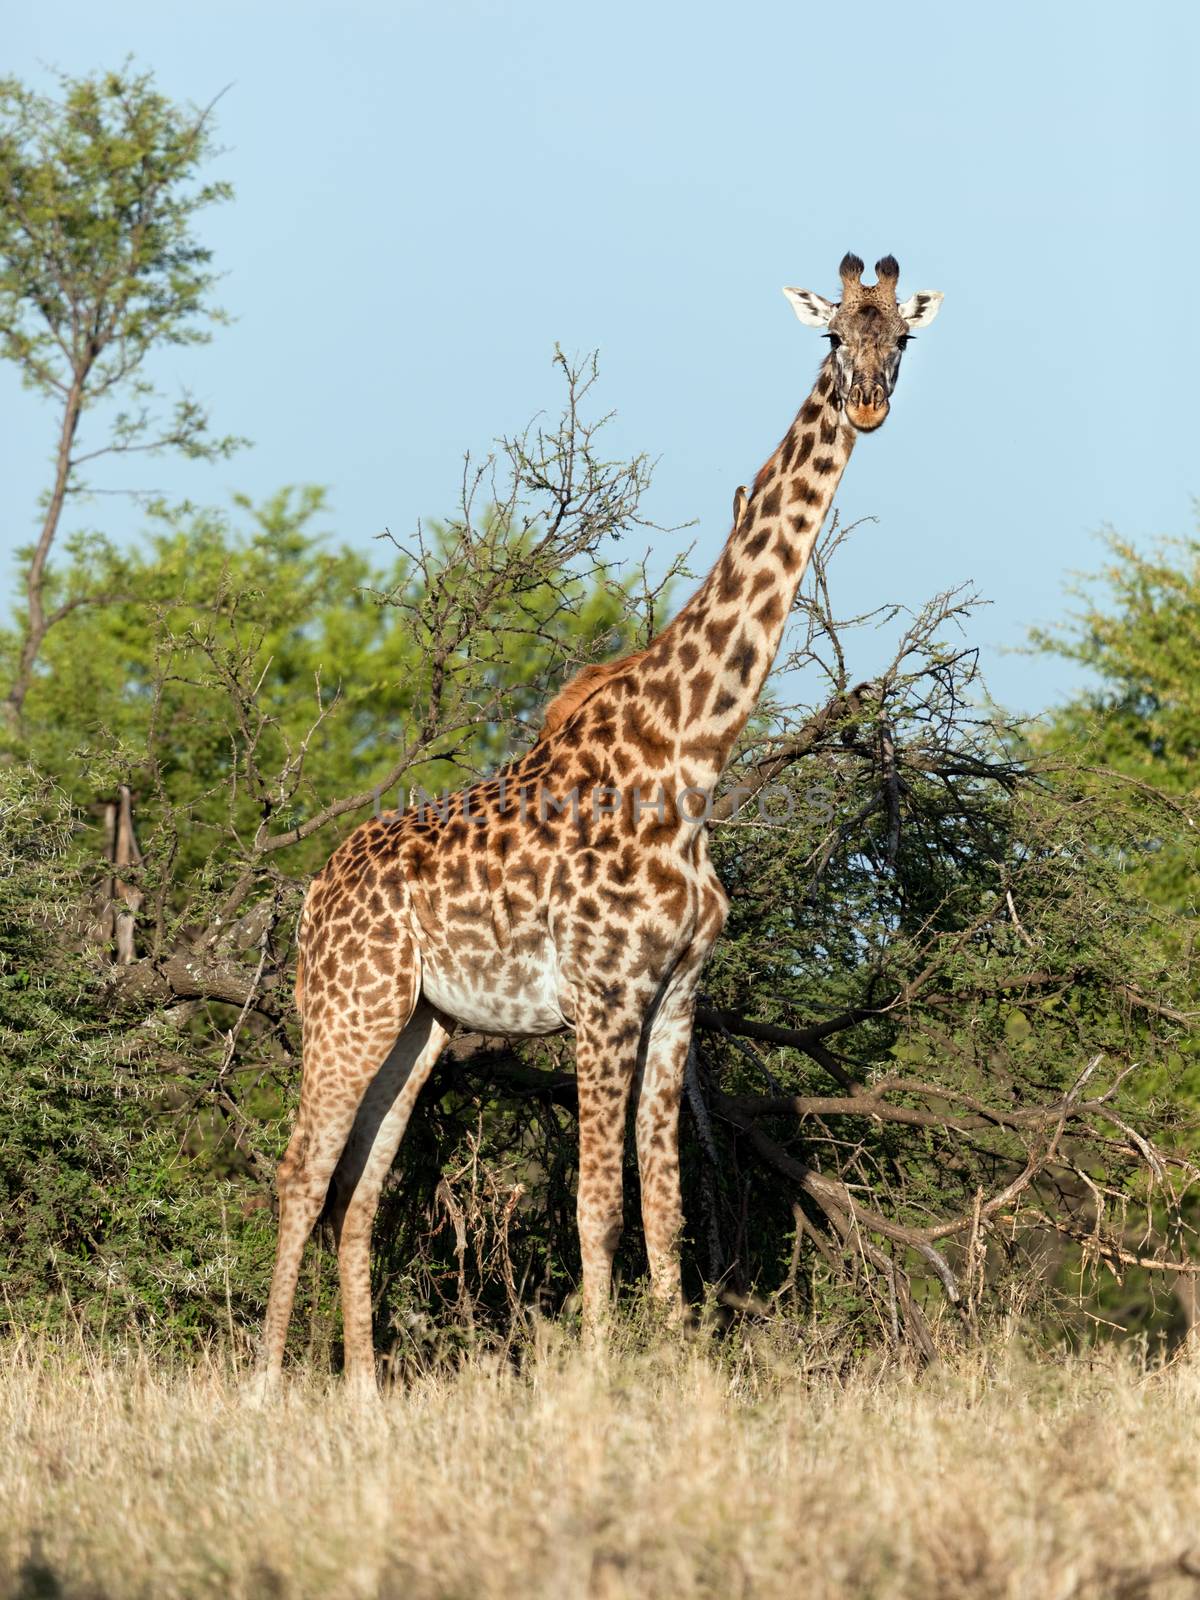 Giraffe on savanna. Safari in Serengeti, Tanzania, Africa by photocreo